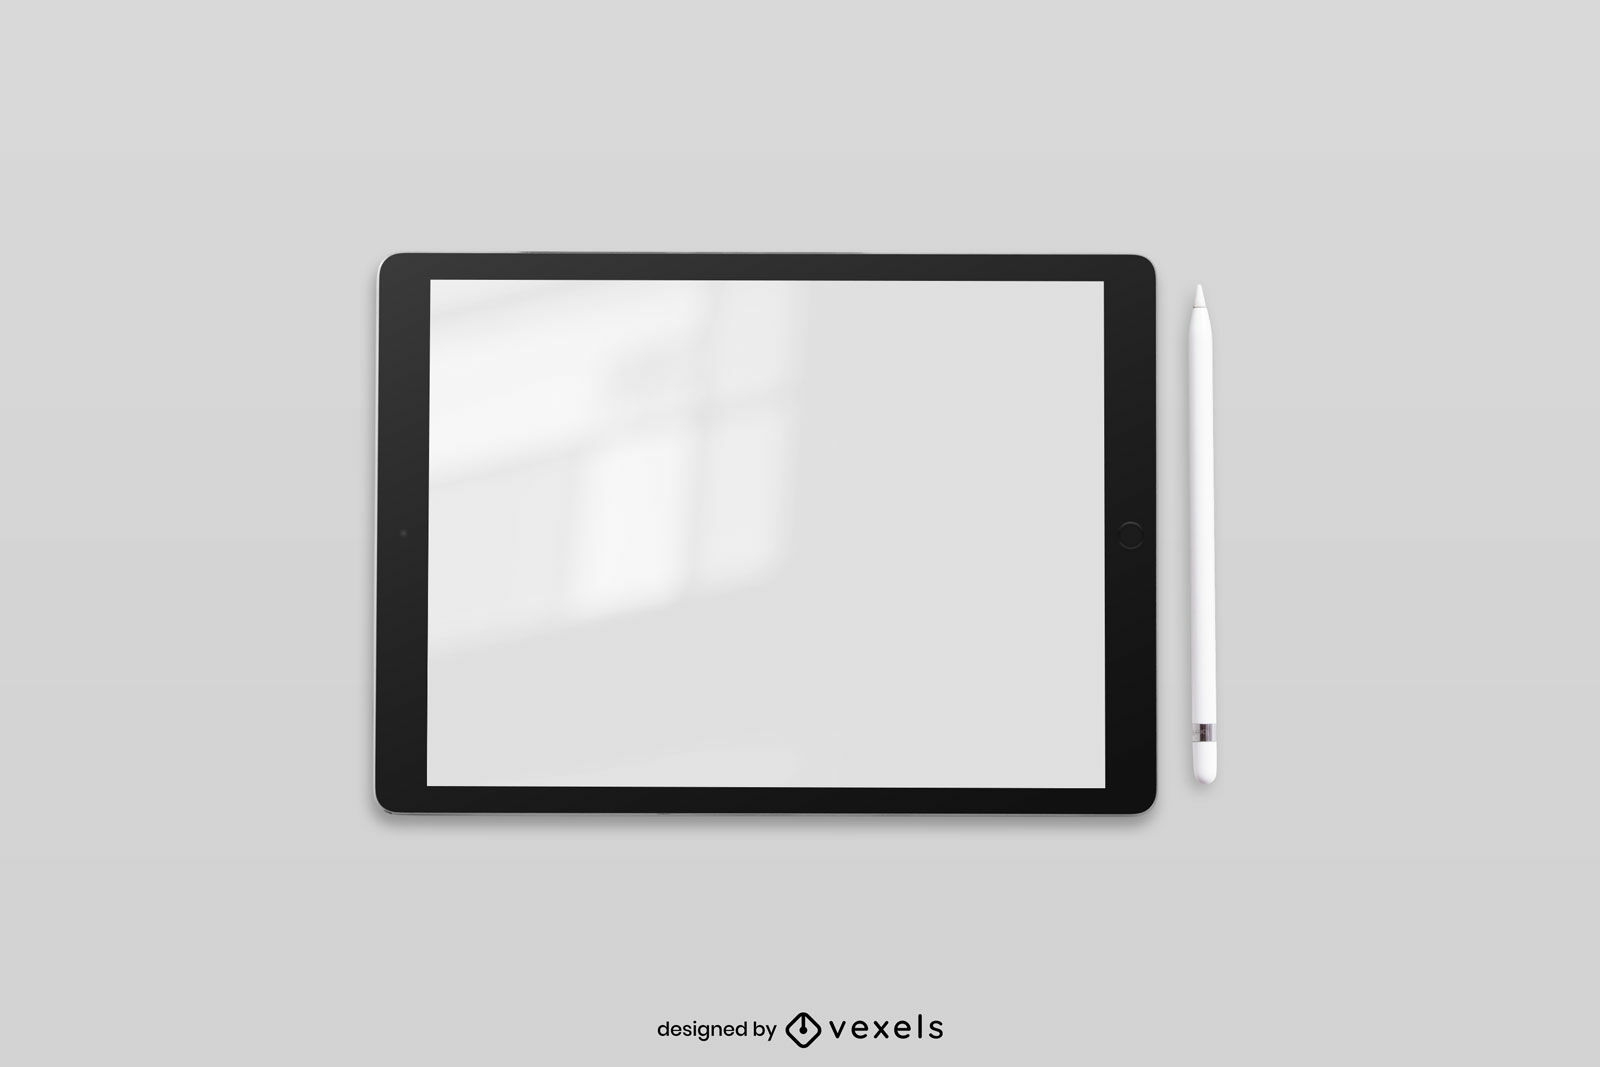 Pantalla de tableta digital en maqueta de fondo sólido